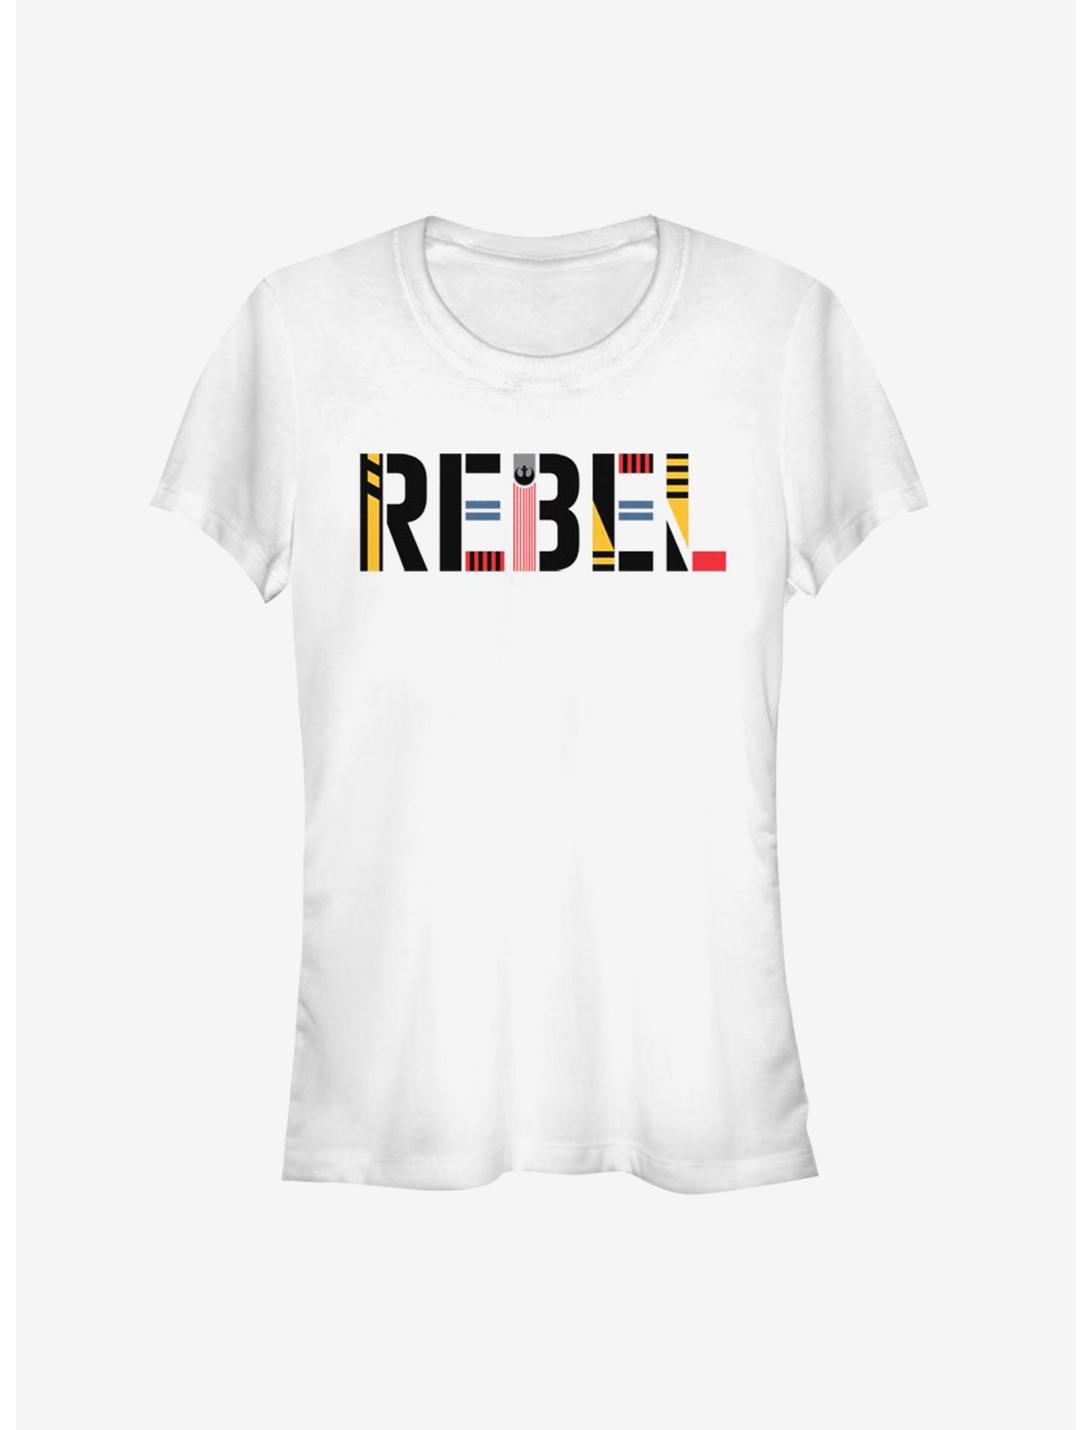 Star Wars: The Rise of Skywalker Rebel Simple Girls T-Shirt, WHITE, hi-res